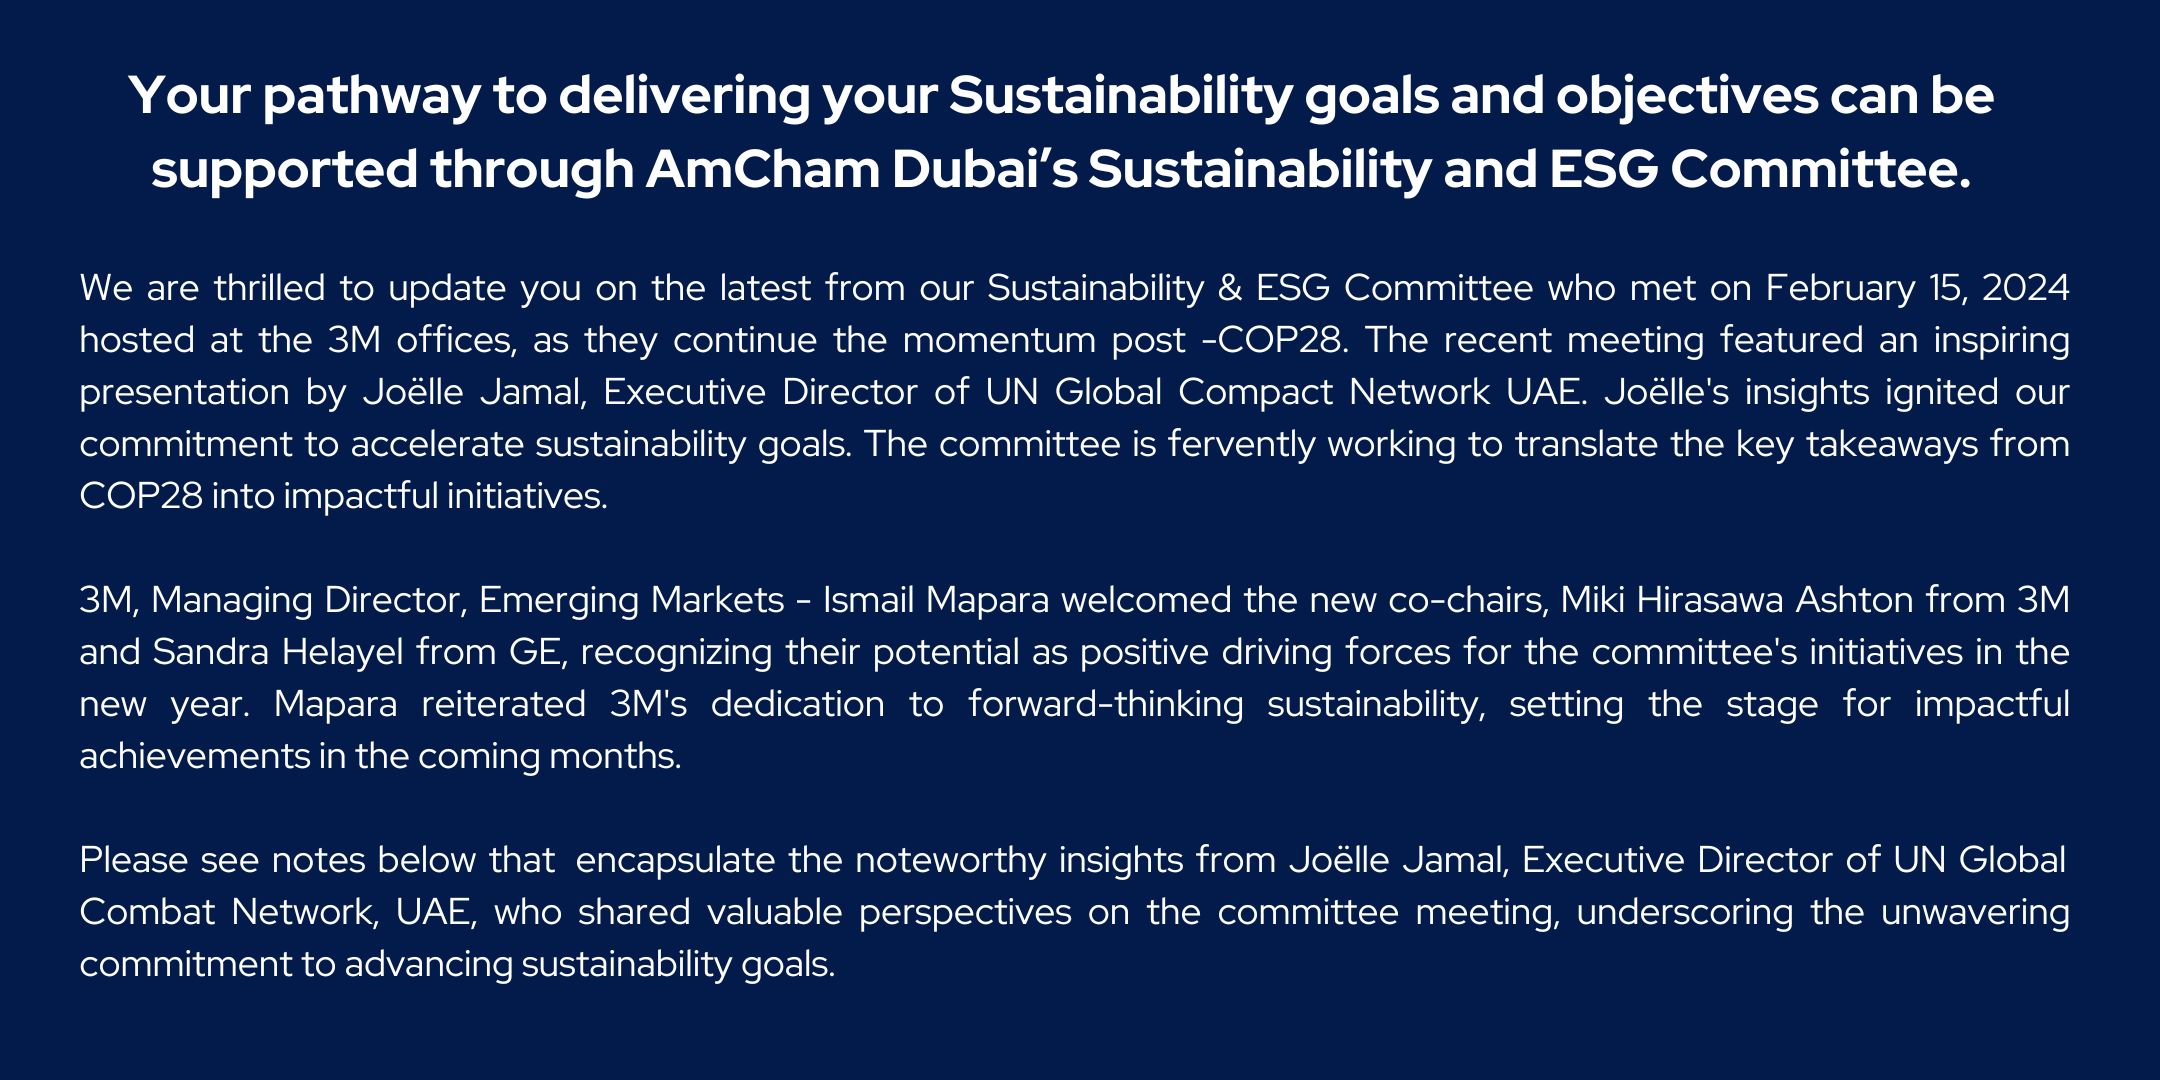 AmCham Dubai Sustainability & ESG Committee